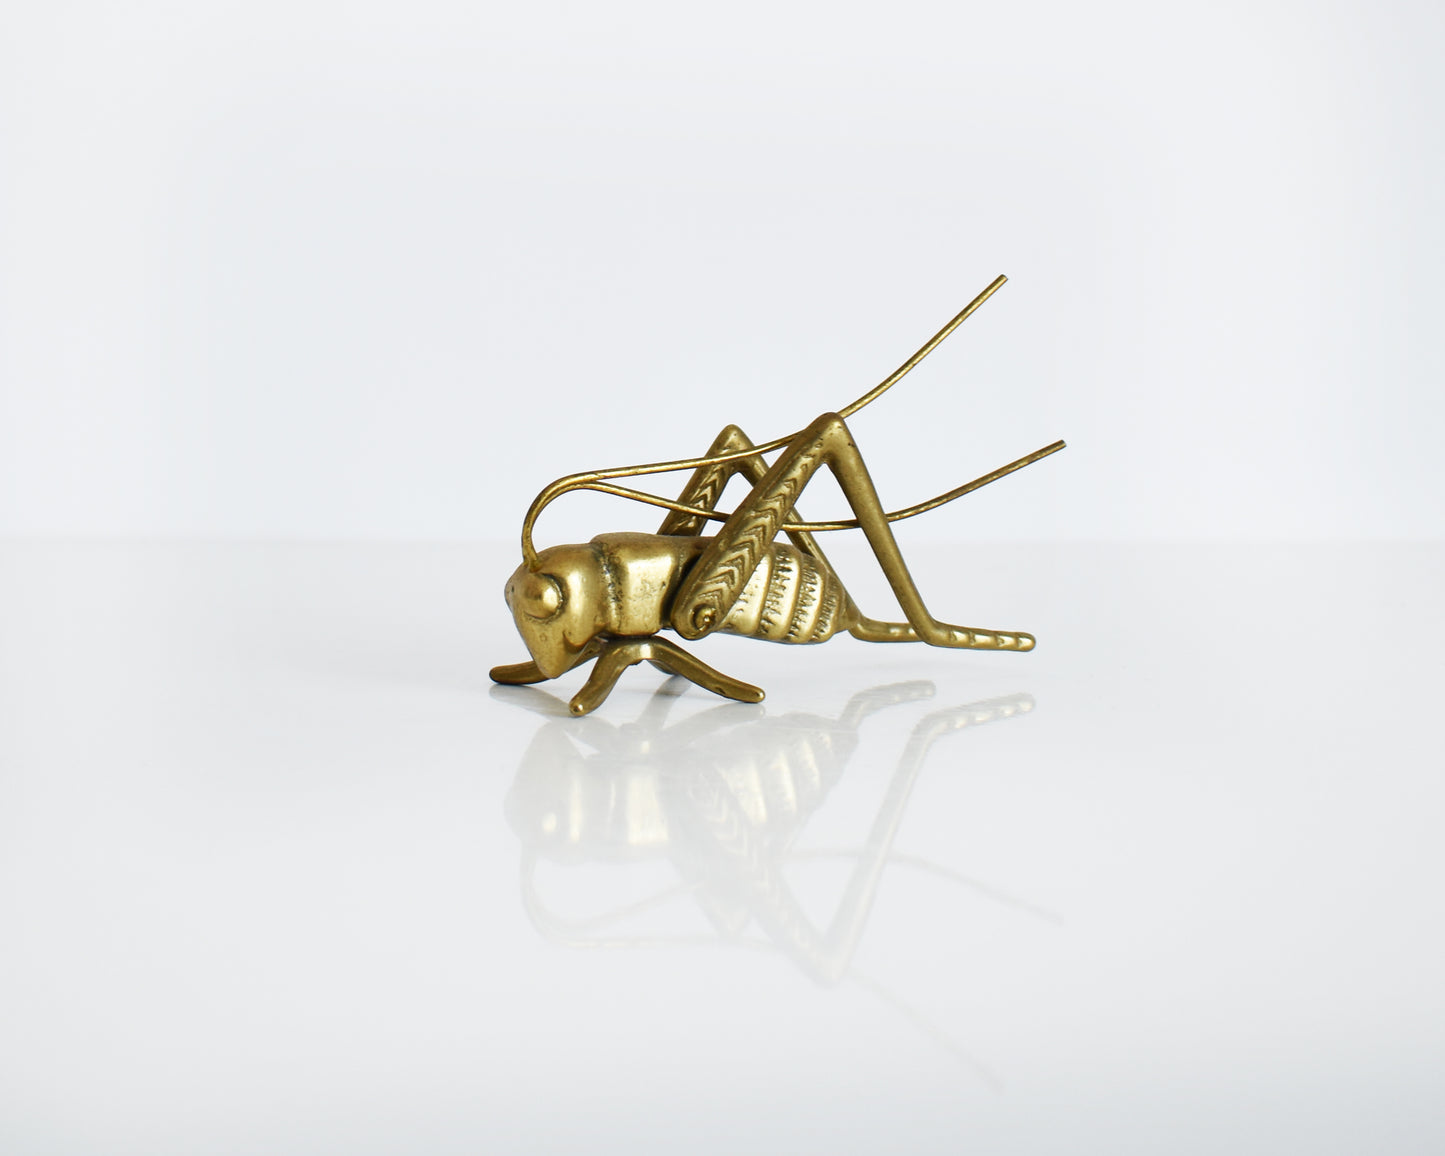 A vintage brass grasshopper/cricket on a white table.